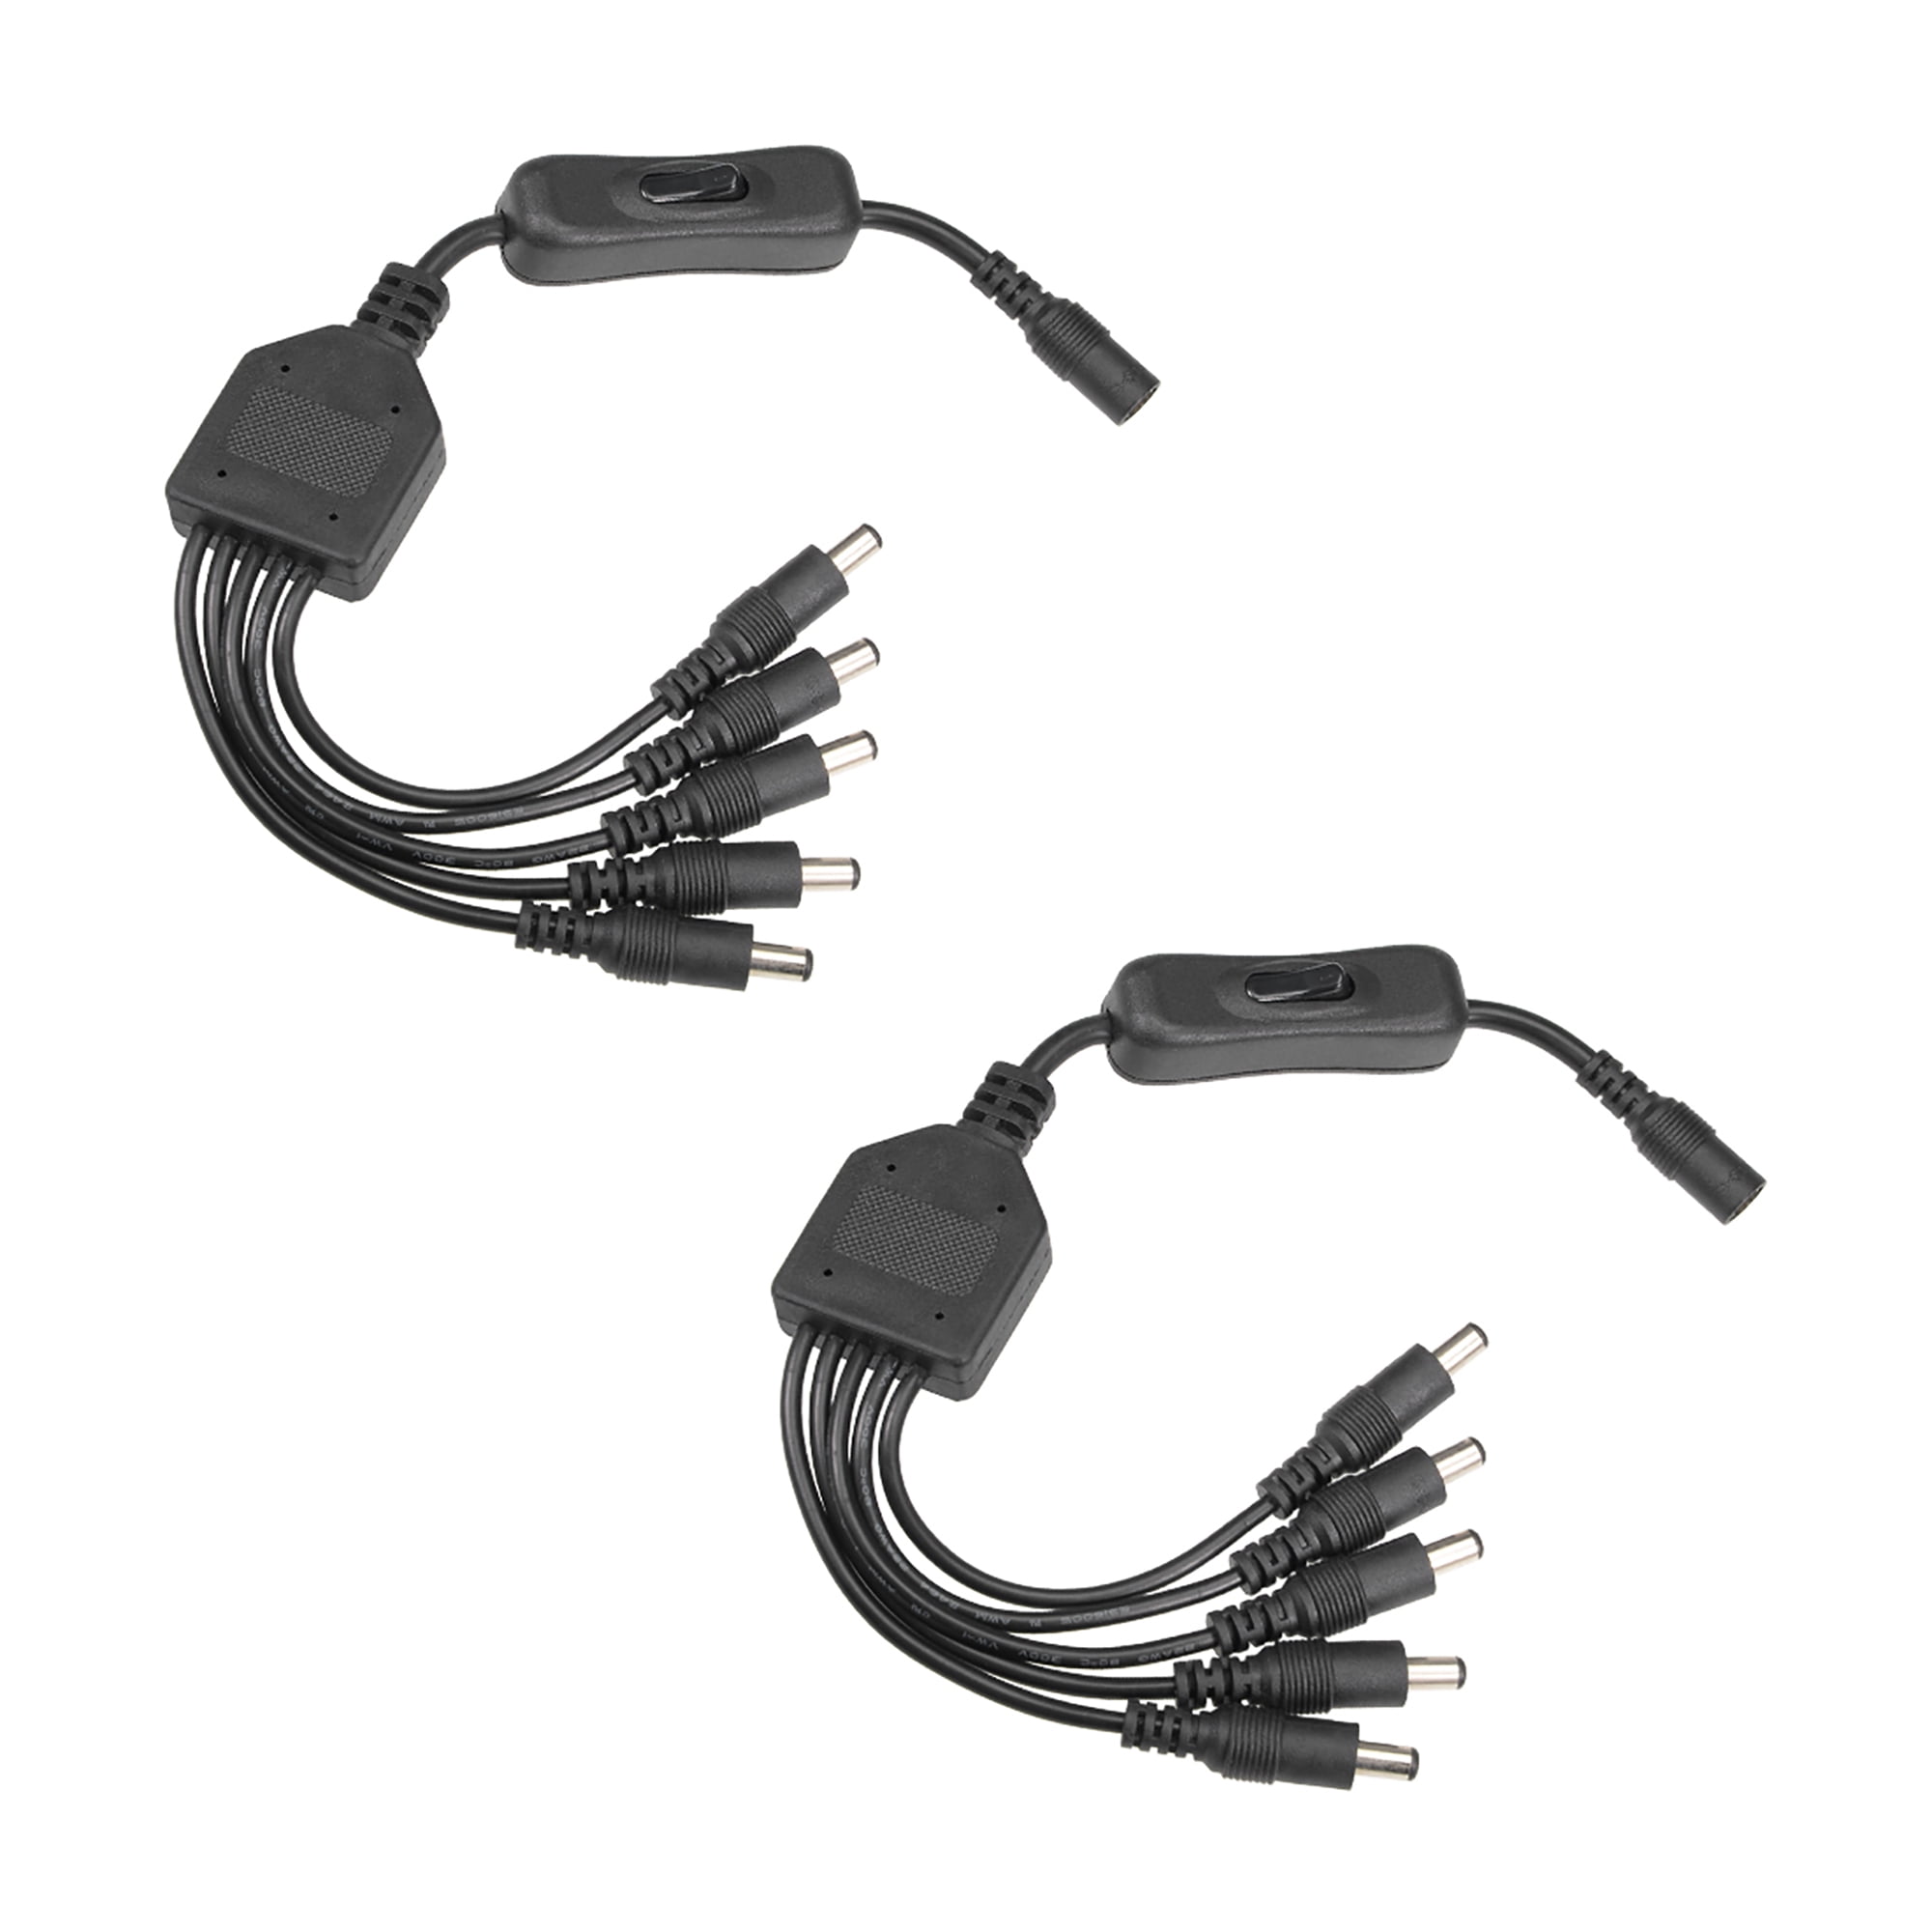 1 To 5 Ports Dc 12v Inline Rocker Switch W 5 5x2 1mm Dc Male To Female Power Cable For Led Strip Light Cctv Camera 2pcs Walmart Com Walmart Com